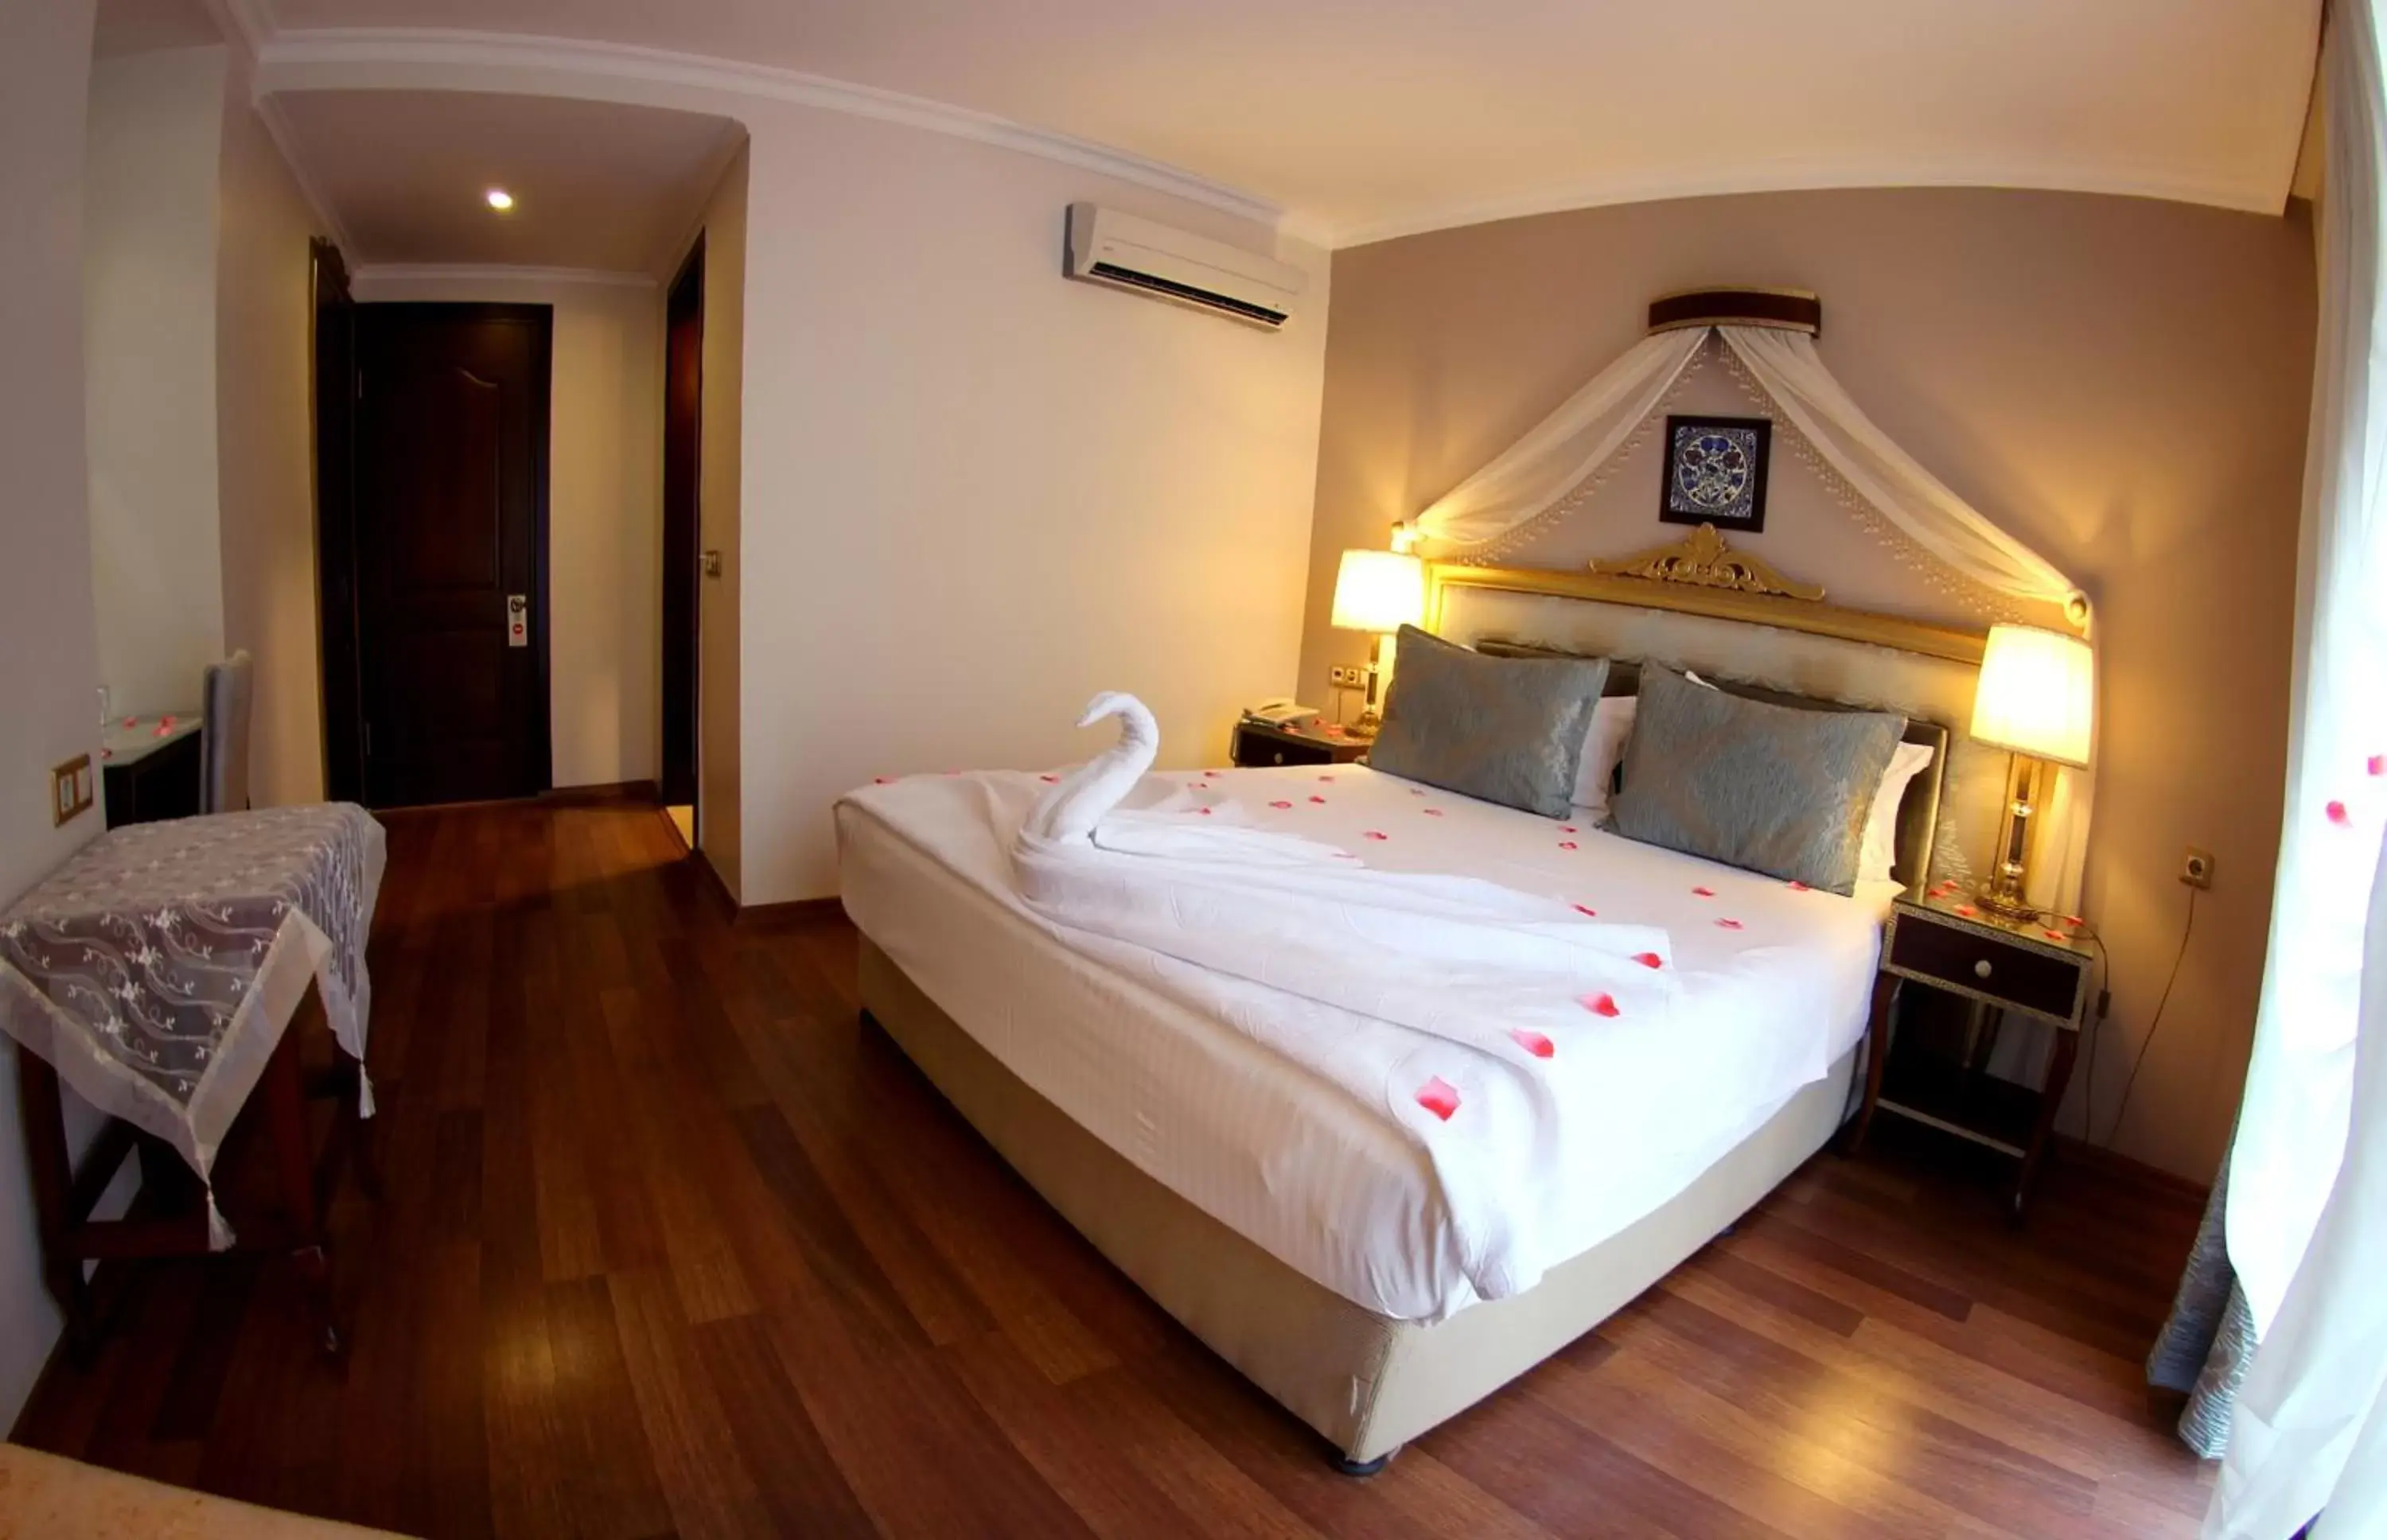 Bed, Room Photo in Saint John Hotel